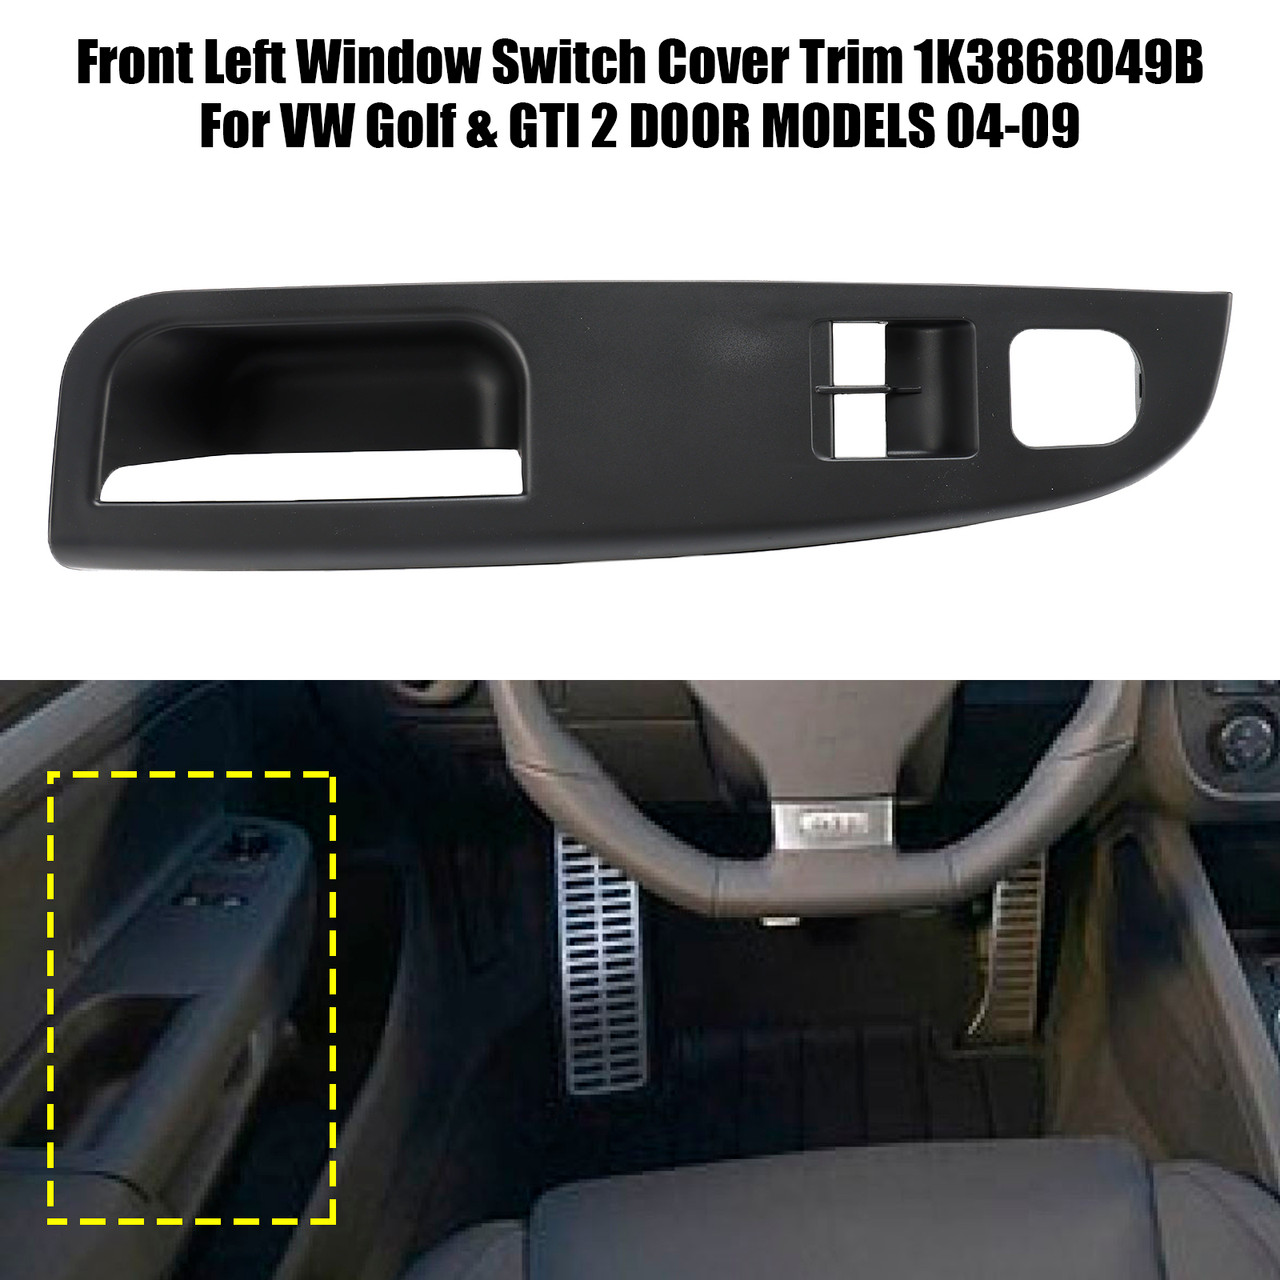 Front Left Window Switch Cover Trim For VW Golf & GTI 2 DOOR MODELS 04-09